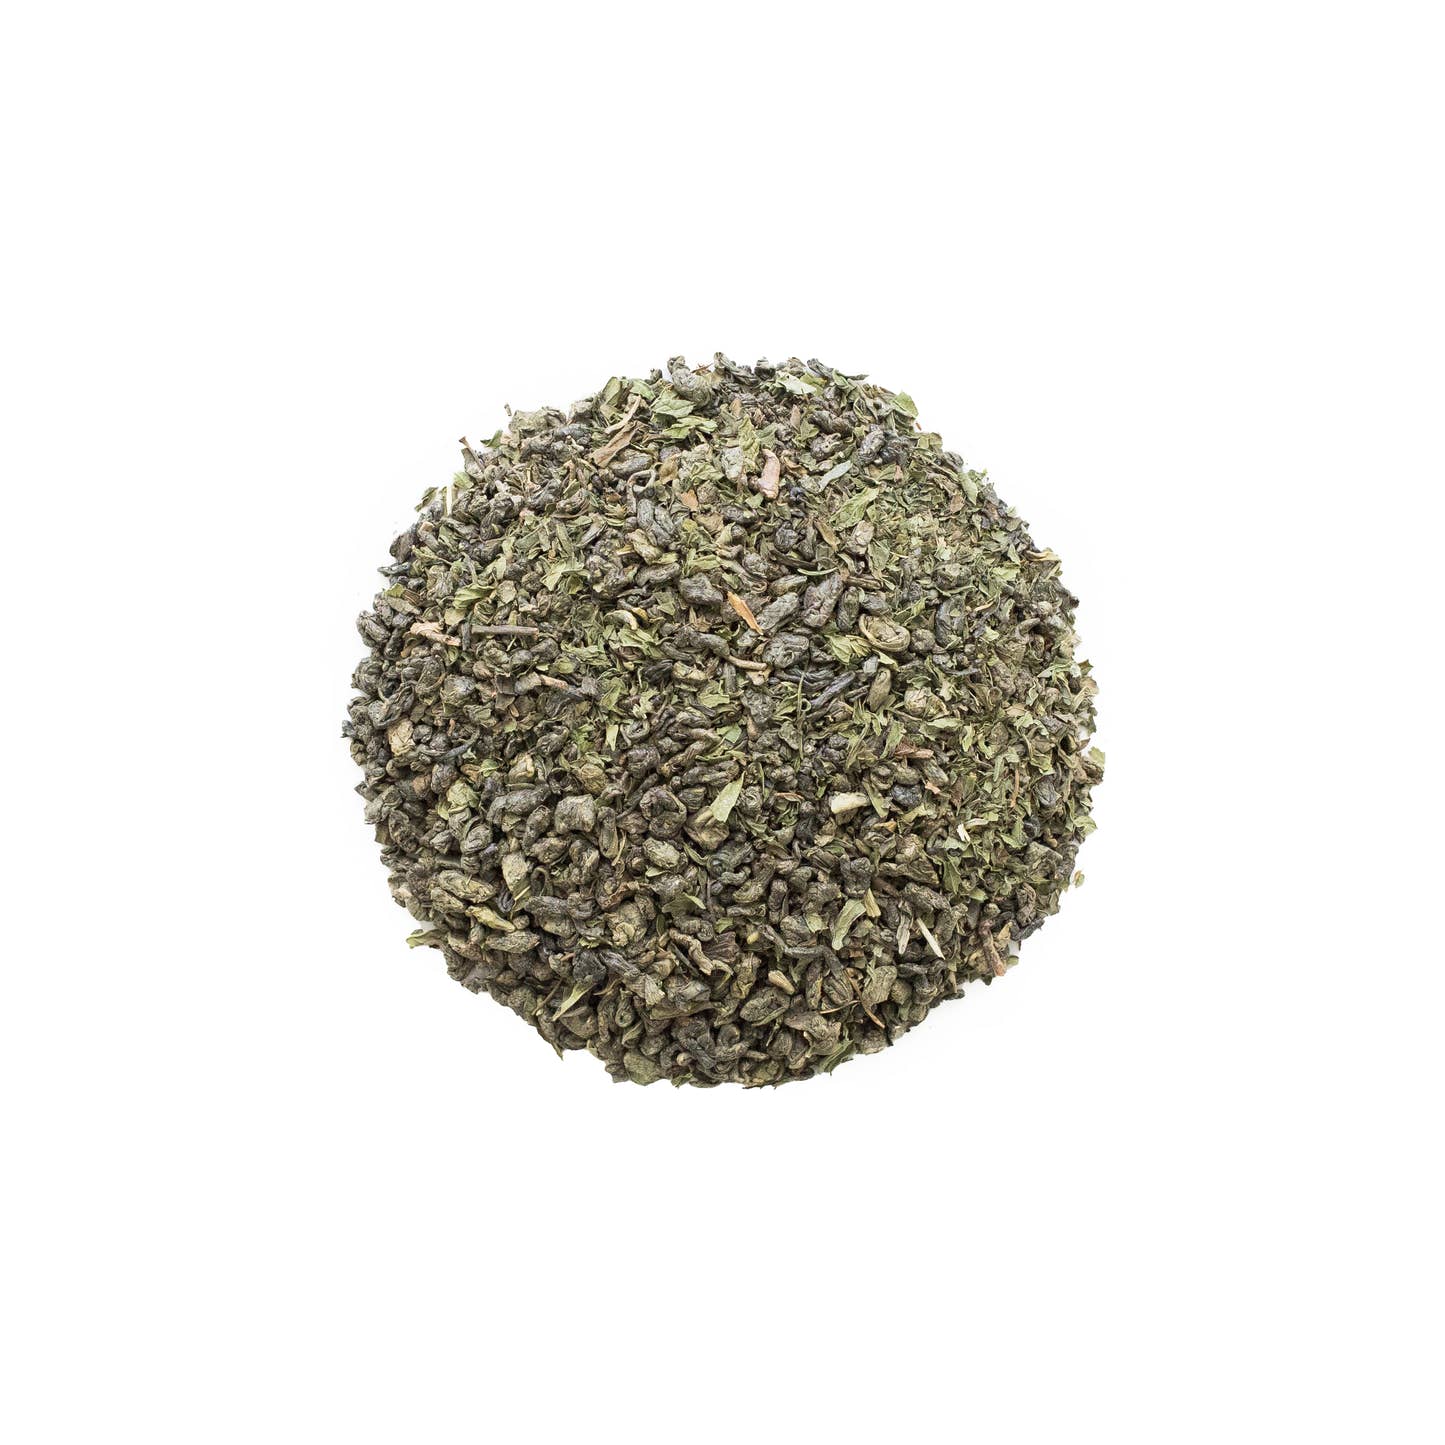 Moroccan Mint green tea  loose leaf tea by Steep Society